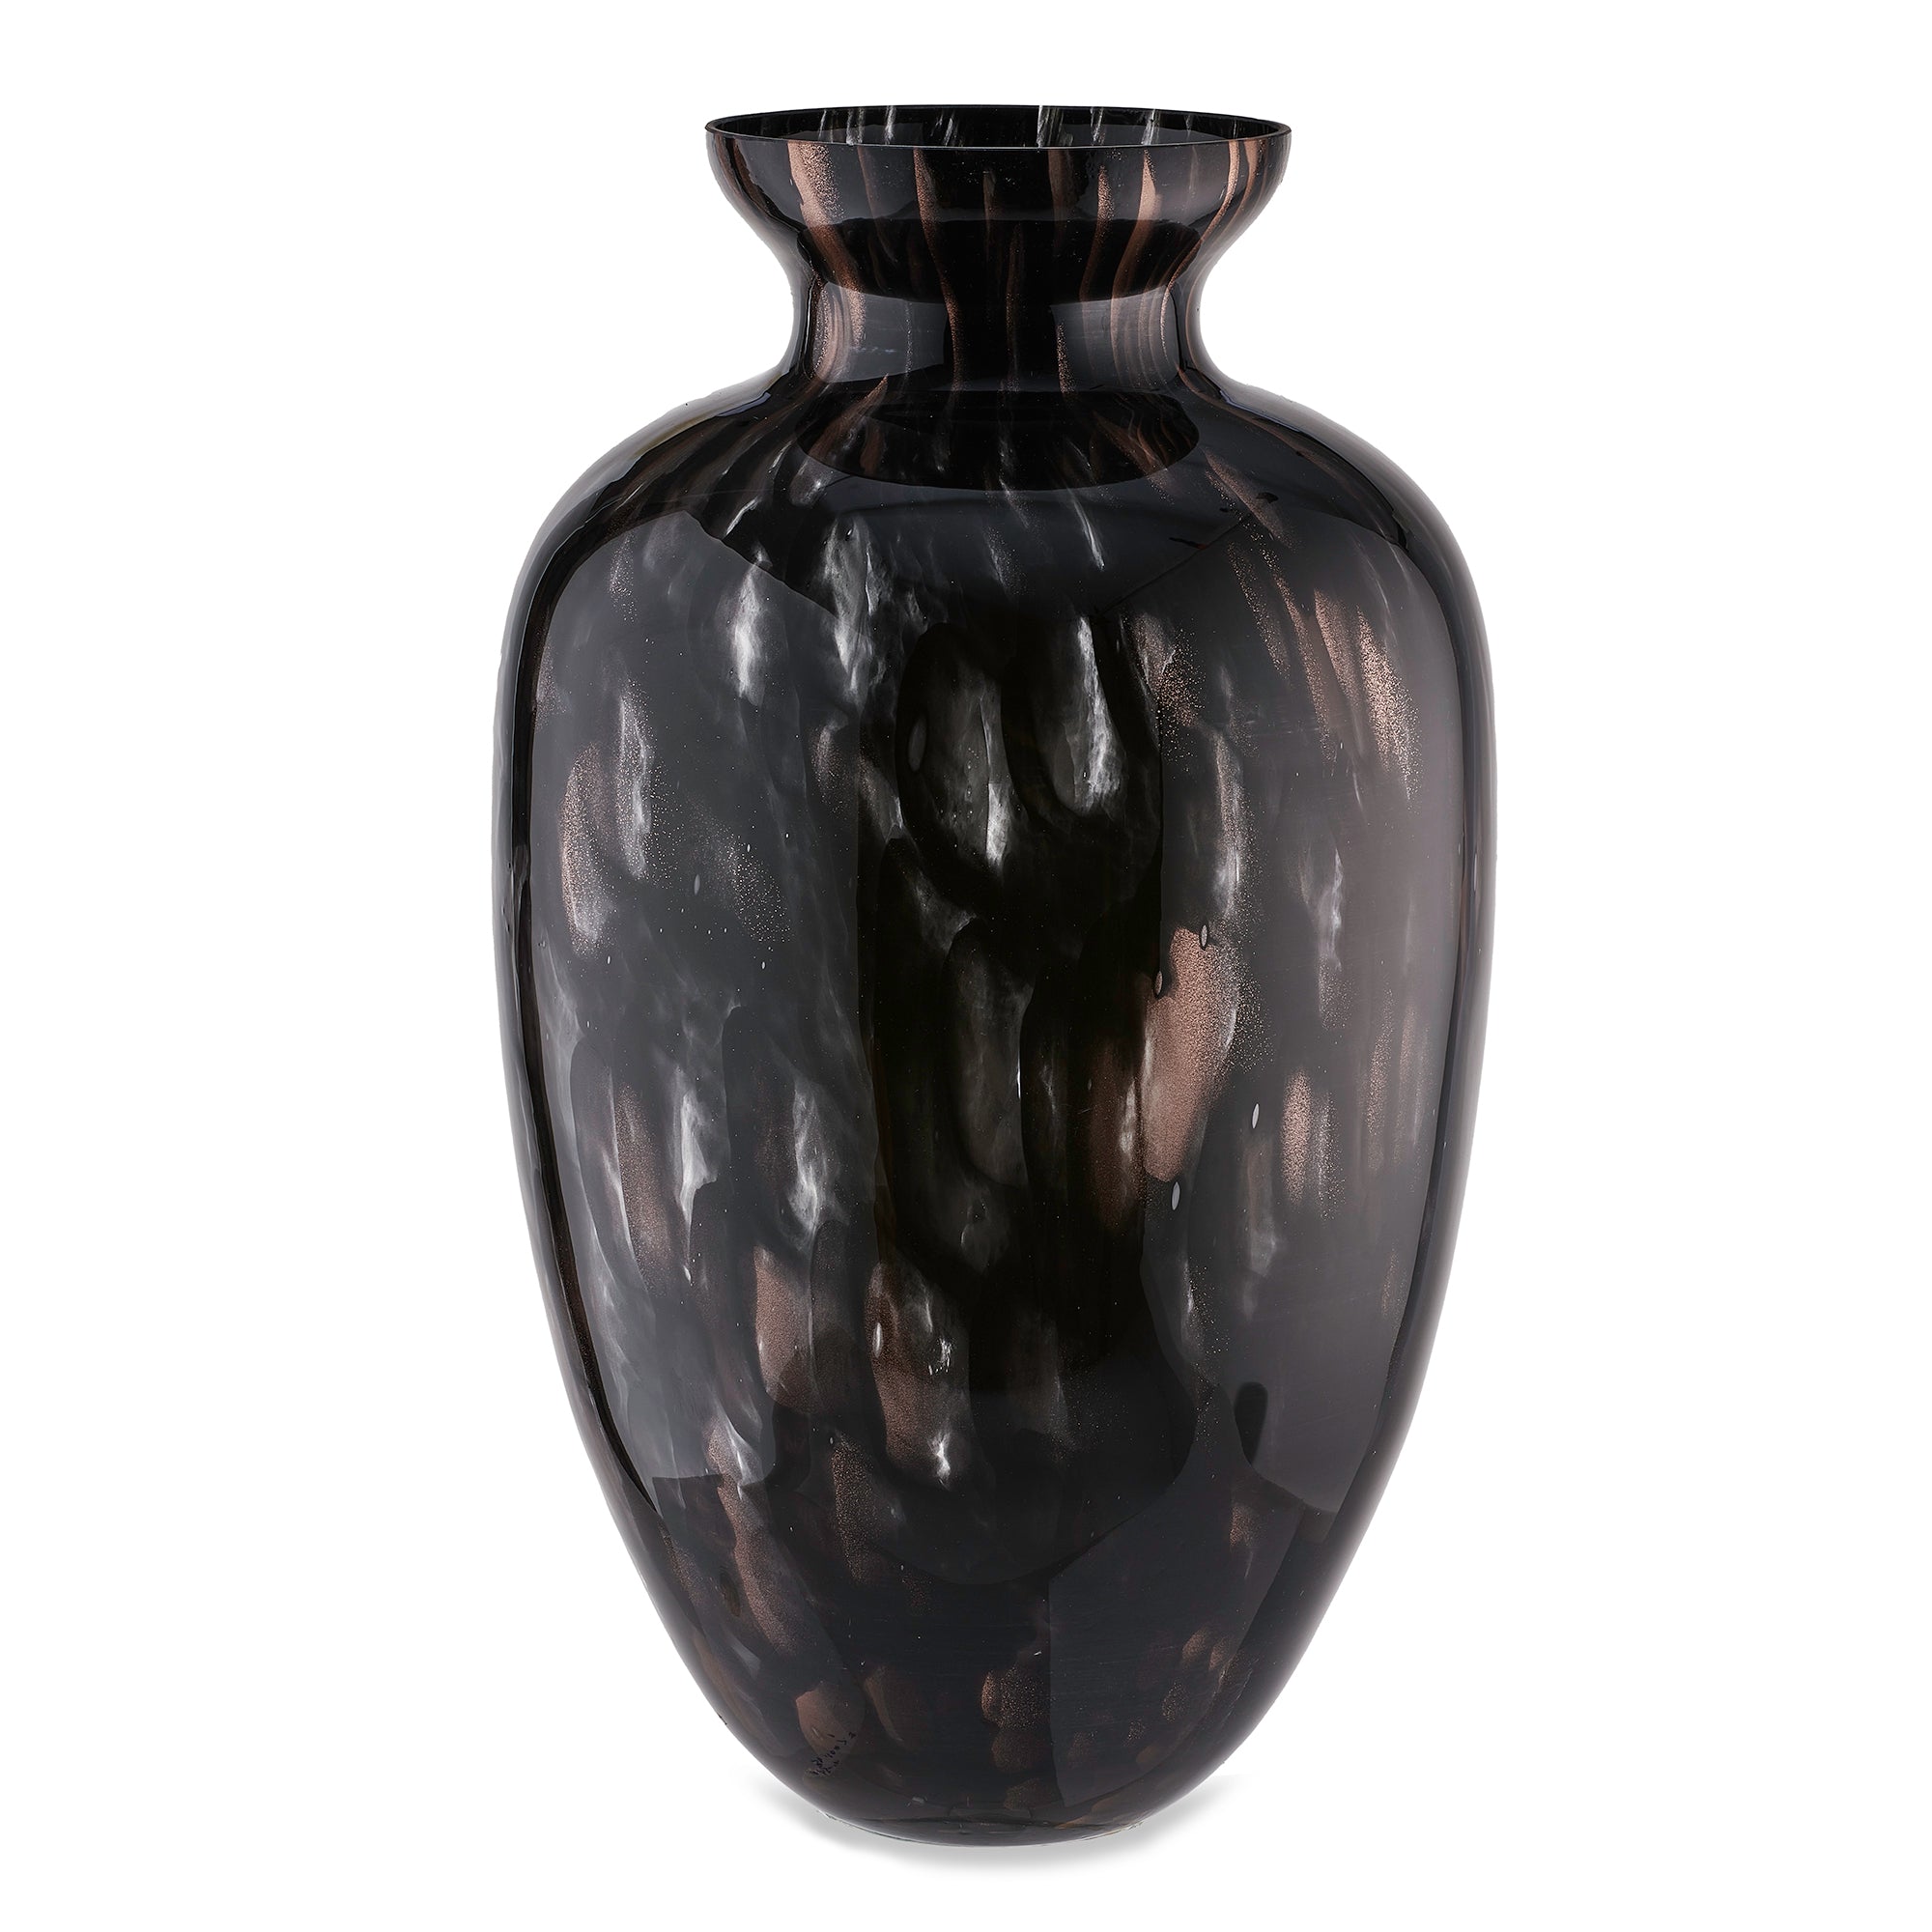 REINESSANCE jarrón artesanal negro en cristal de Murano